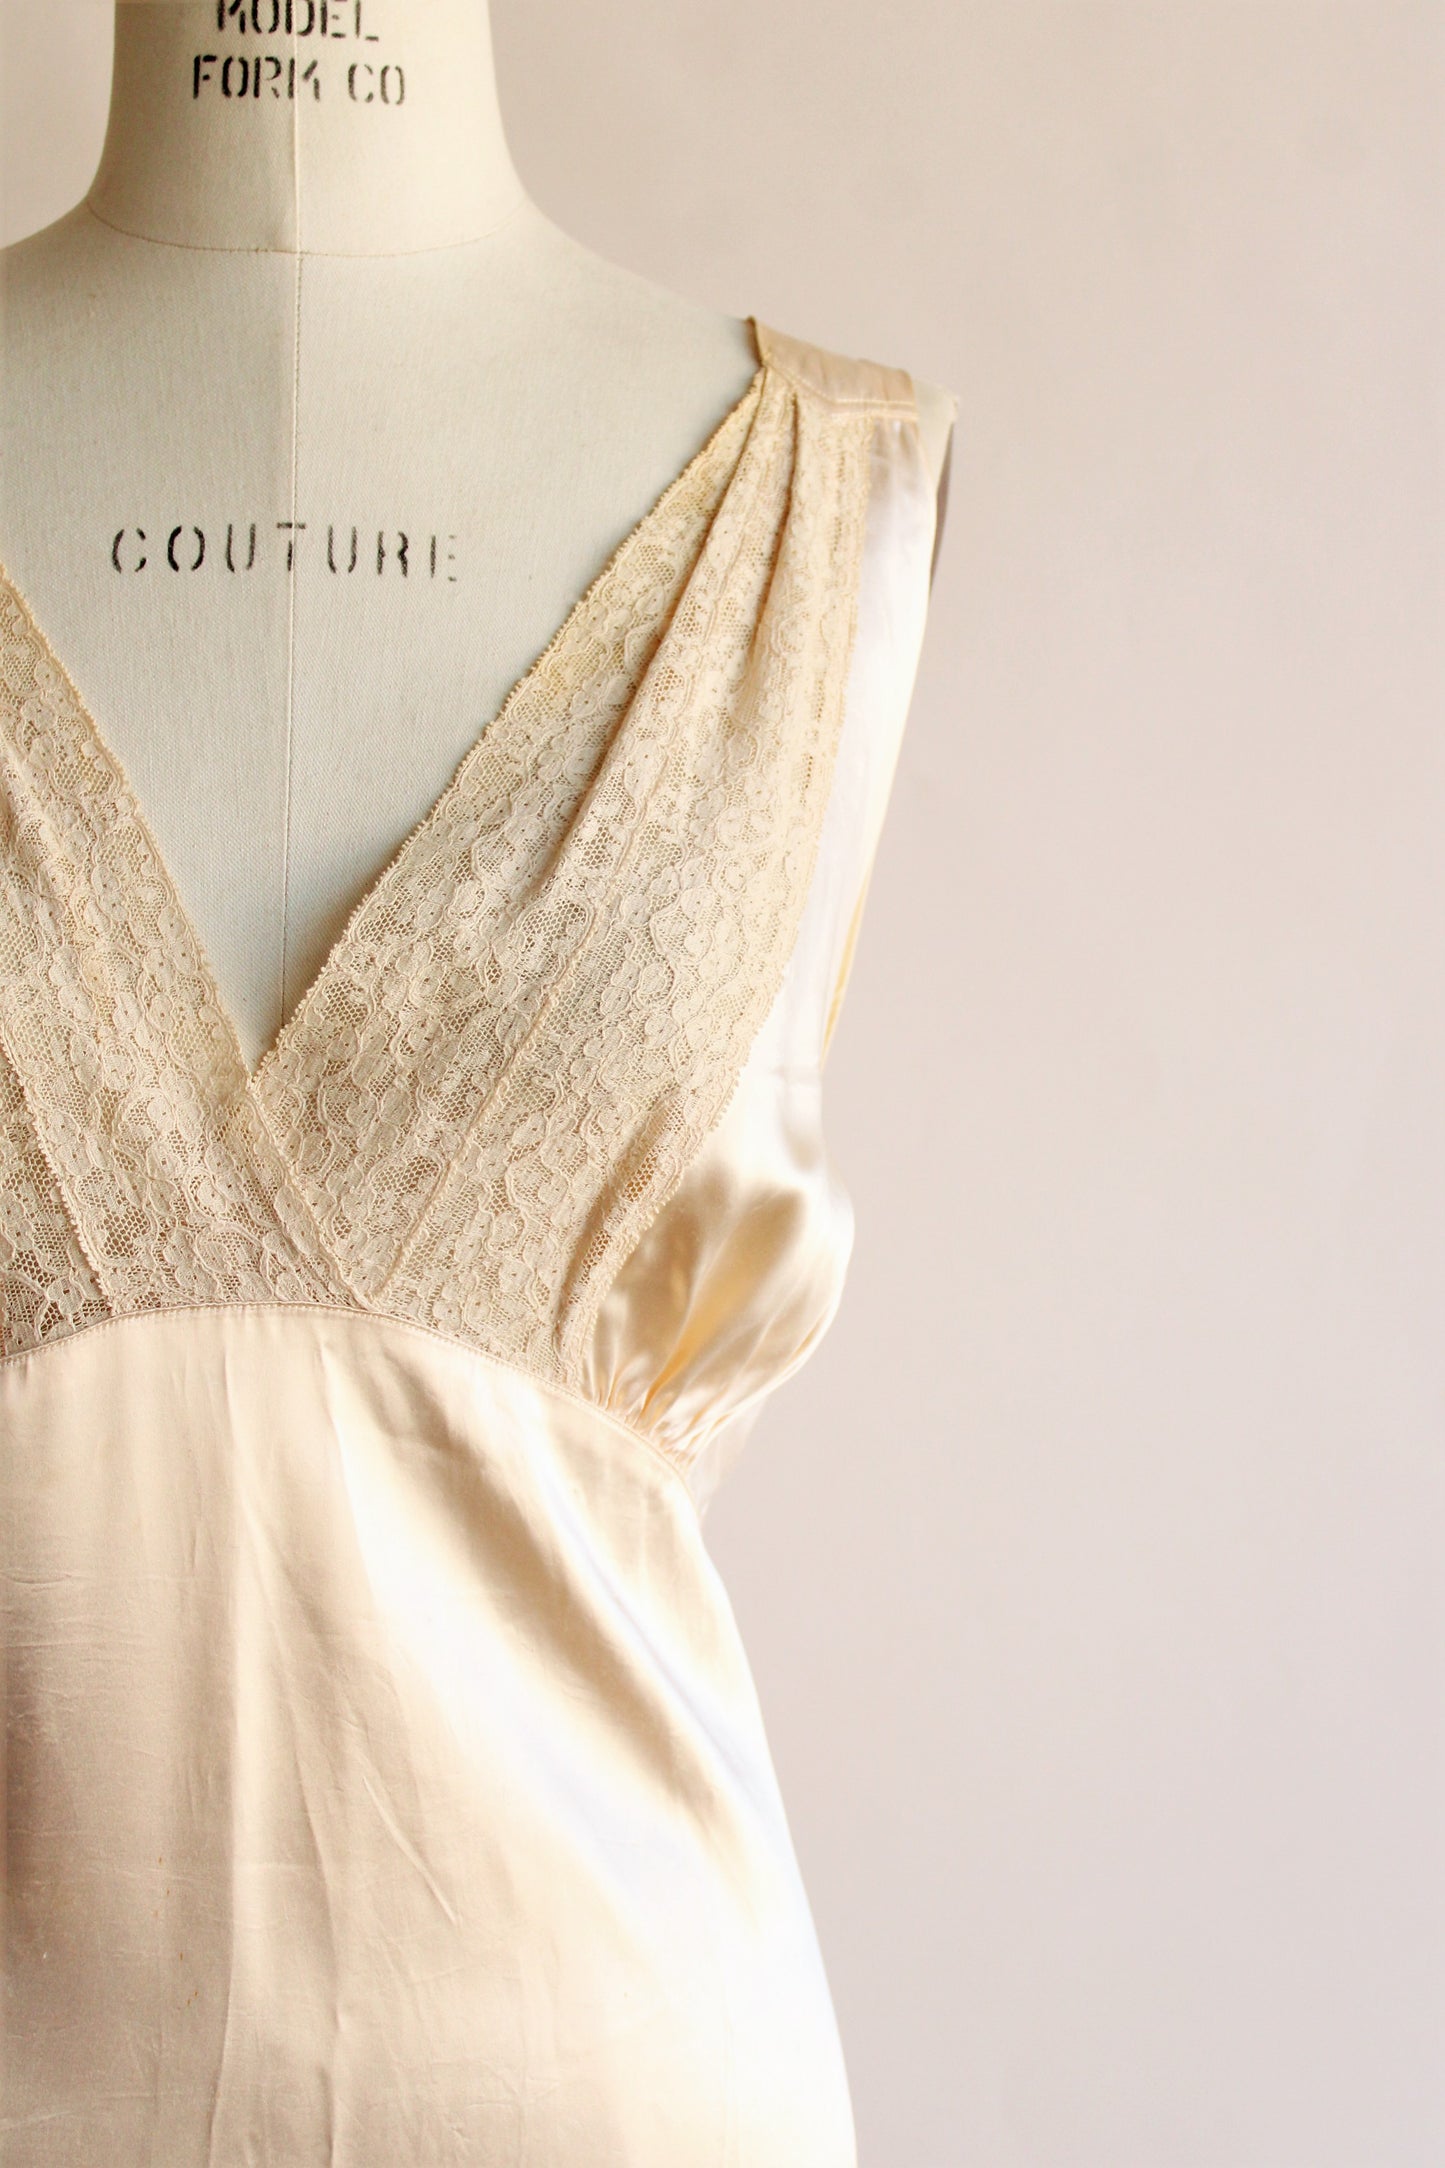 Vintage 1950s Peachy-Ivory Satin Nightgown